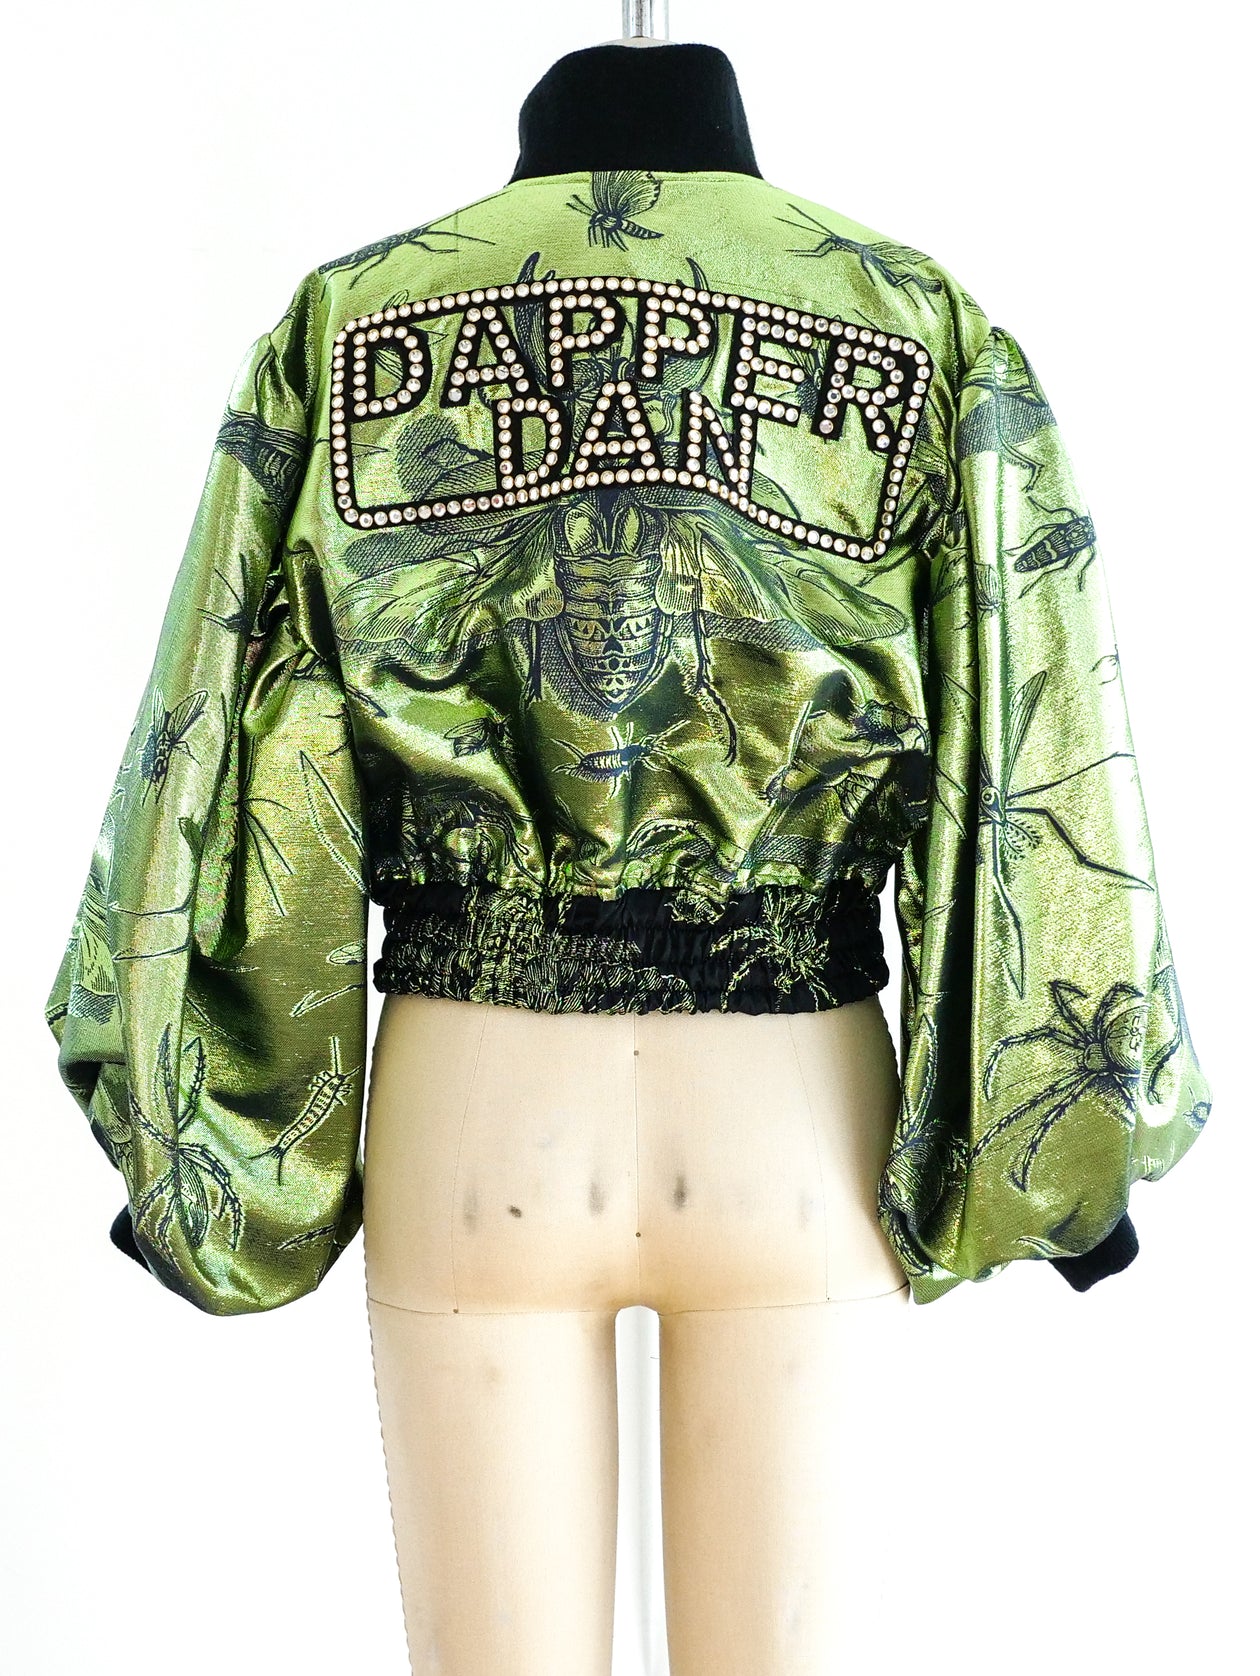 Gucci Dapper Dan Metallic Jacket